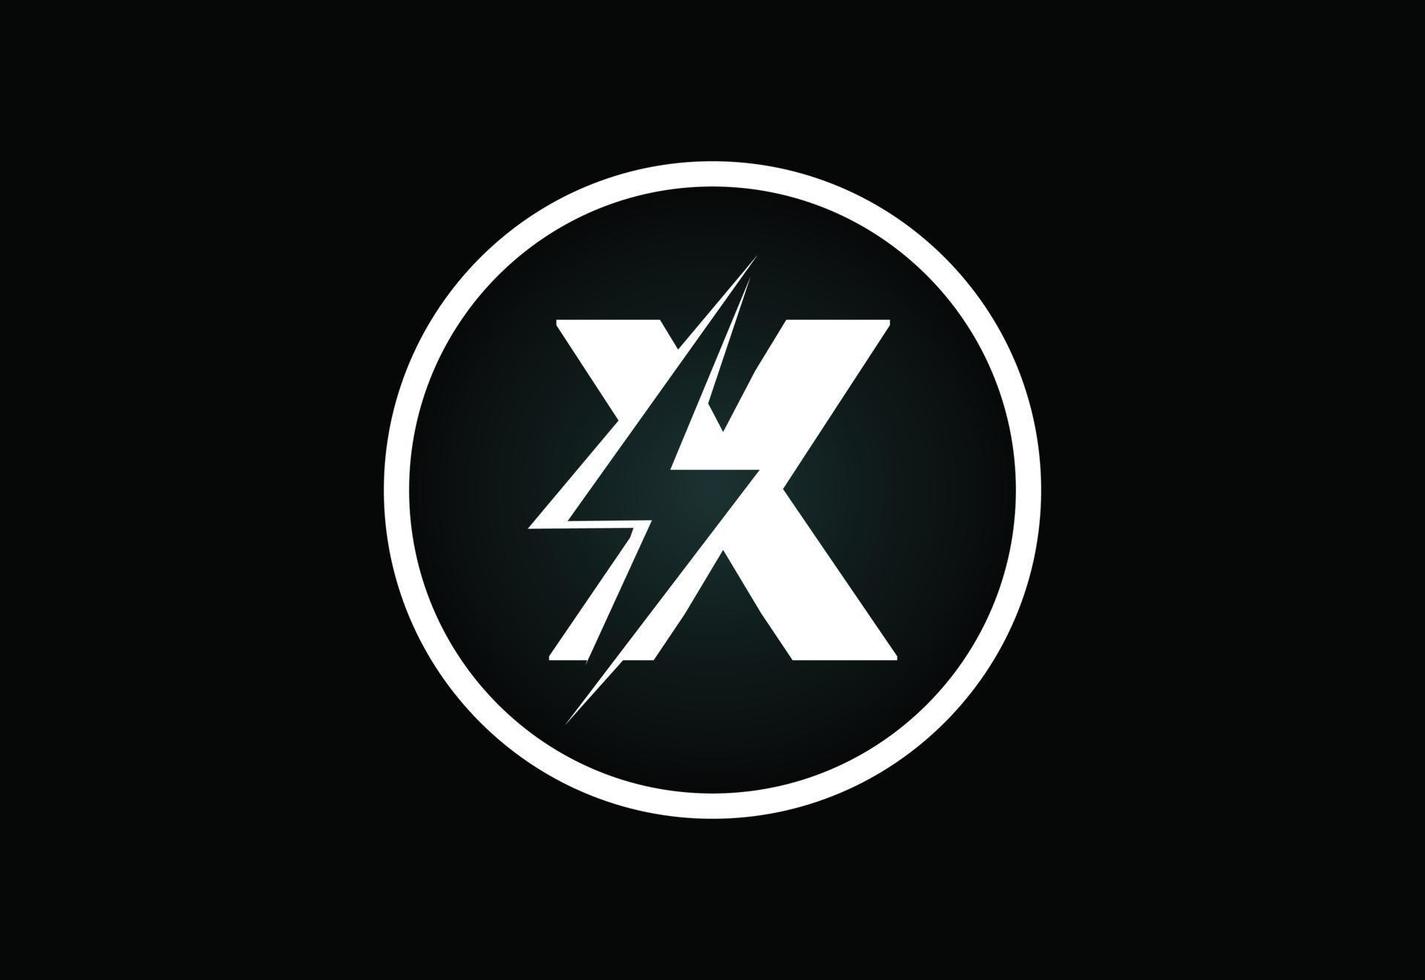 Initial X letter logo design with lighting thunder bolt. Electric bolt letter logo vector